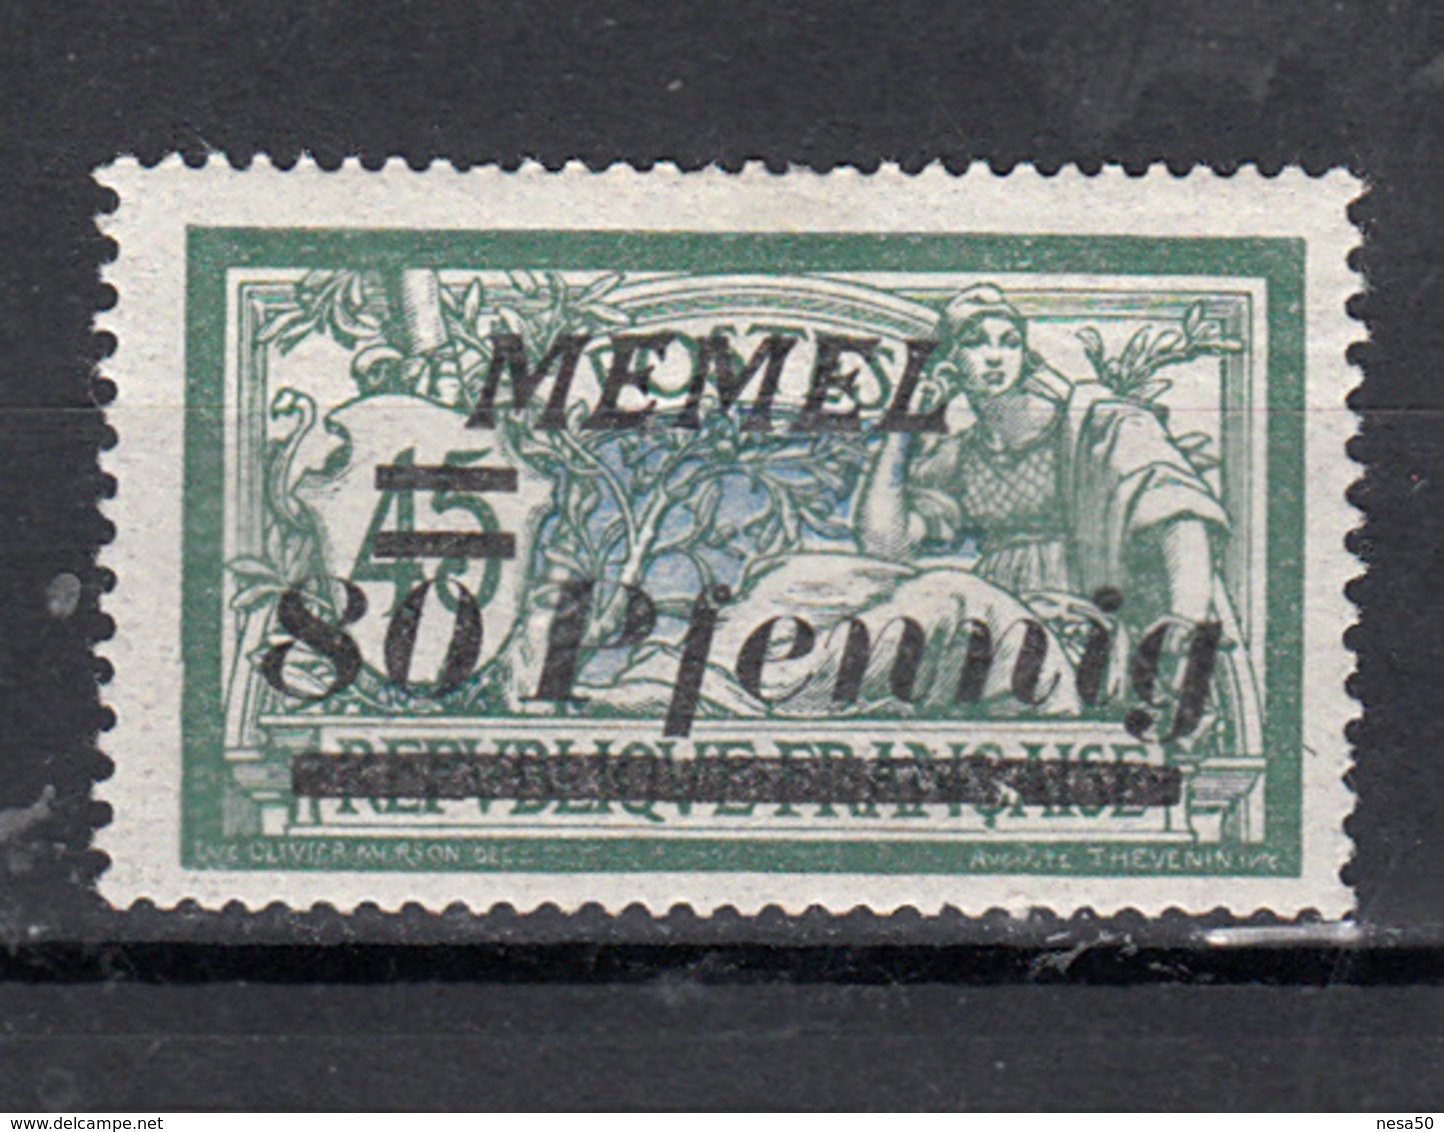 Duitse Rijk Gebied Memel 1920 Mi Nr 25  Waarde 80 Op 45, Met Plakker - Unused Stamps